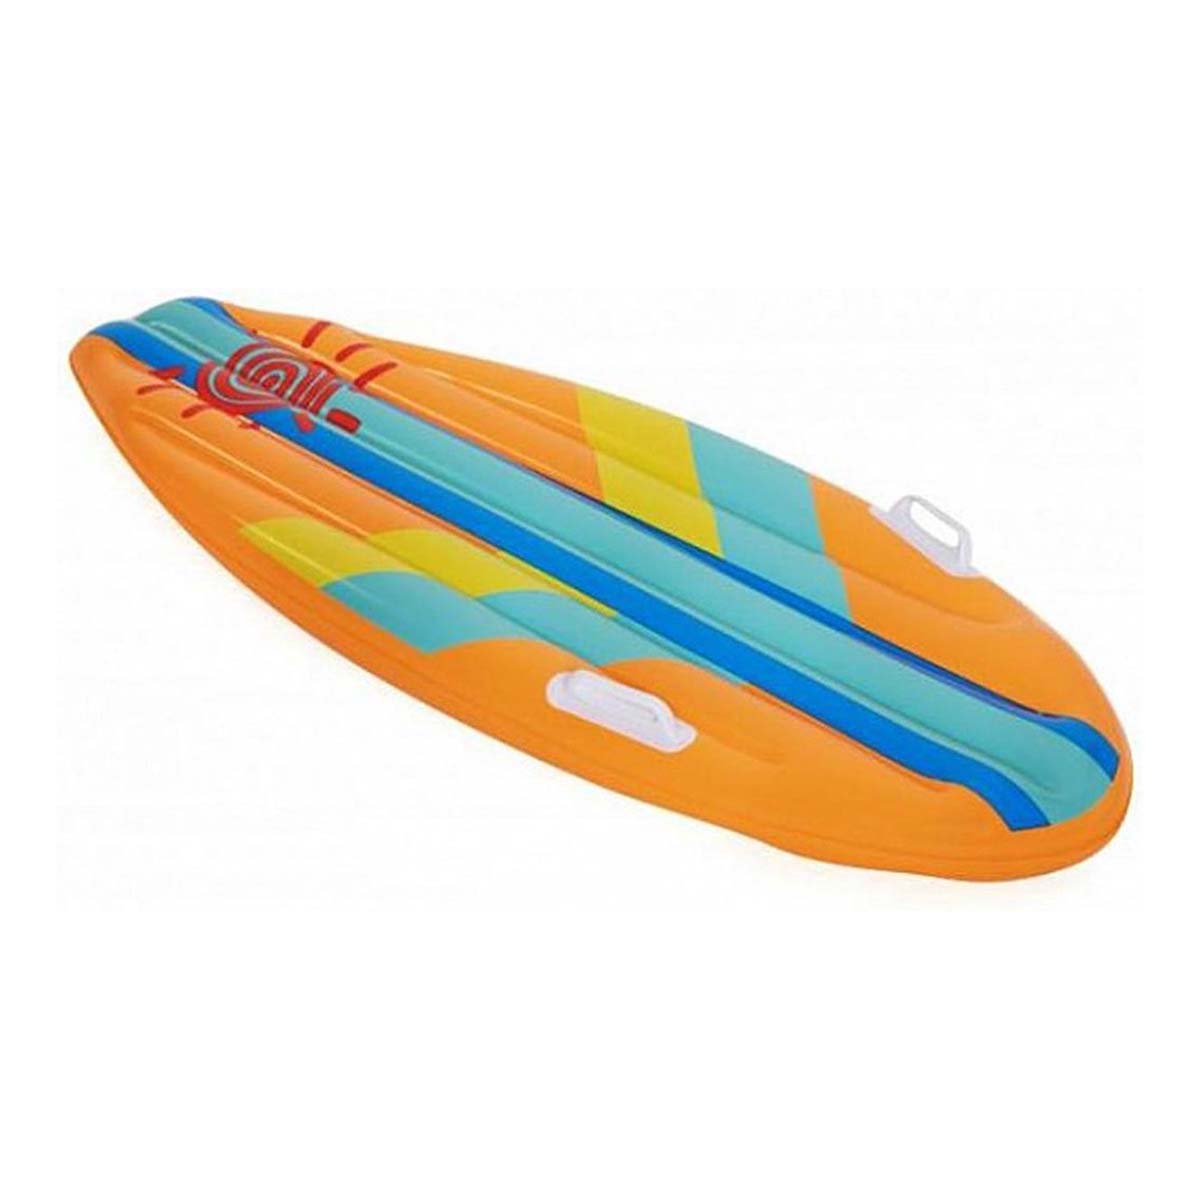 Ontmoedigen elkaar krullen Ariko Surf Boy & Girl mat -114X46 Cm - Opblaasbare surfboard - Surfpla